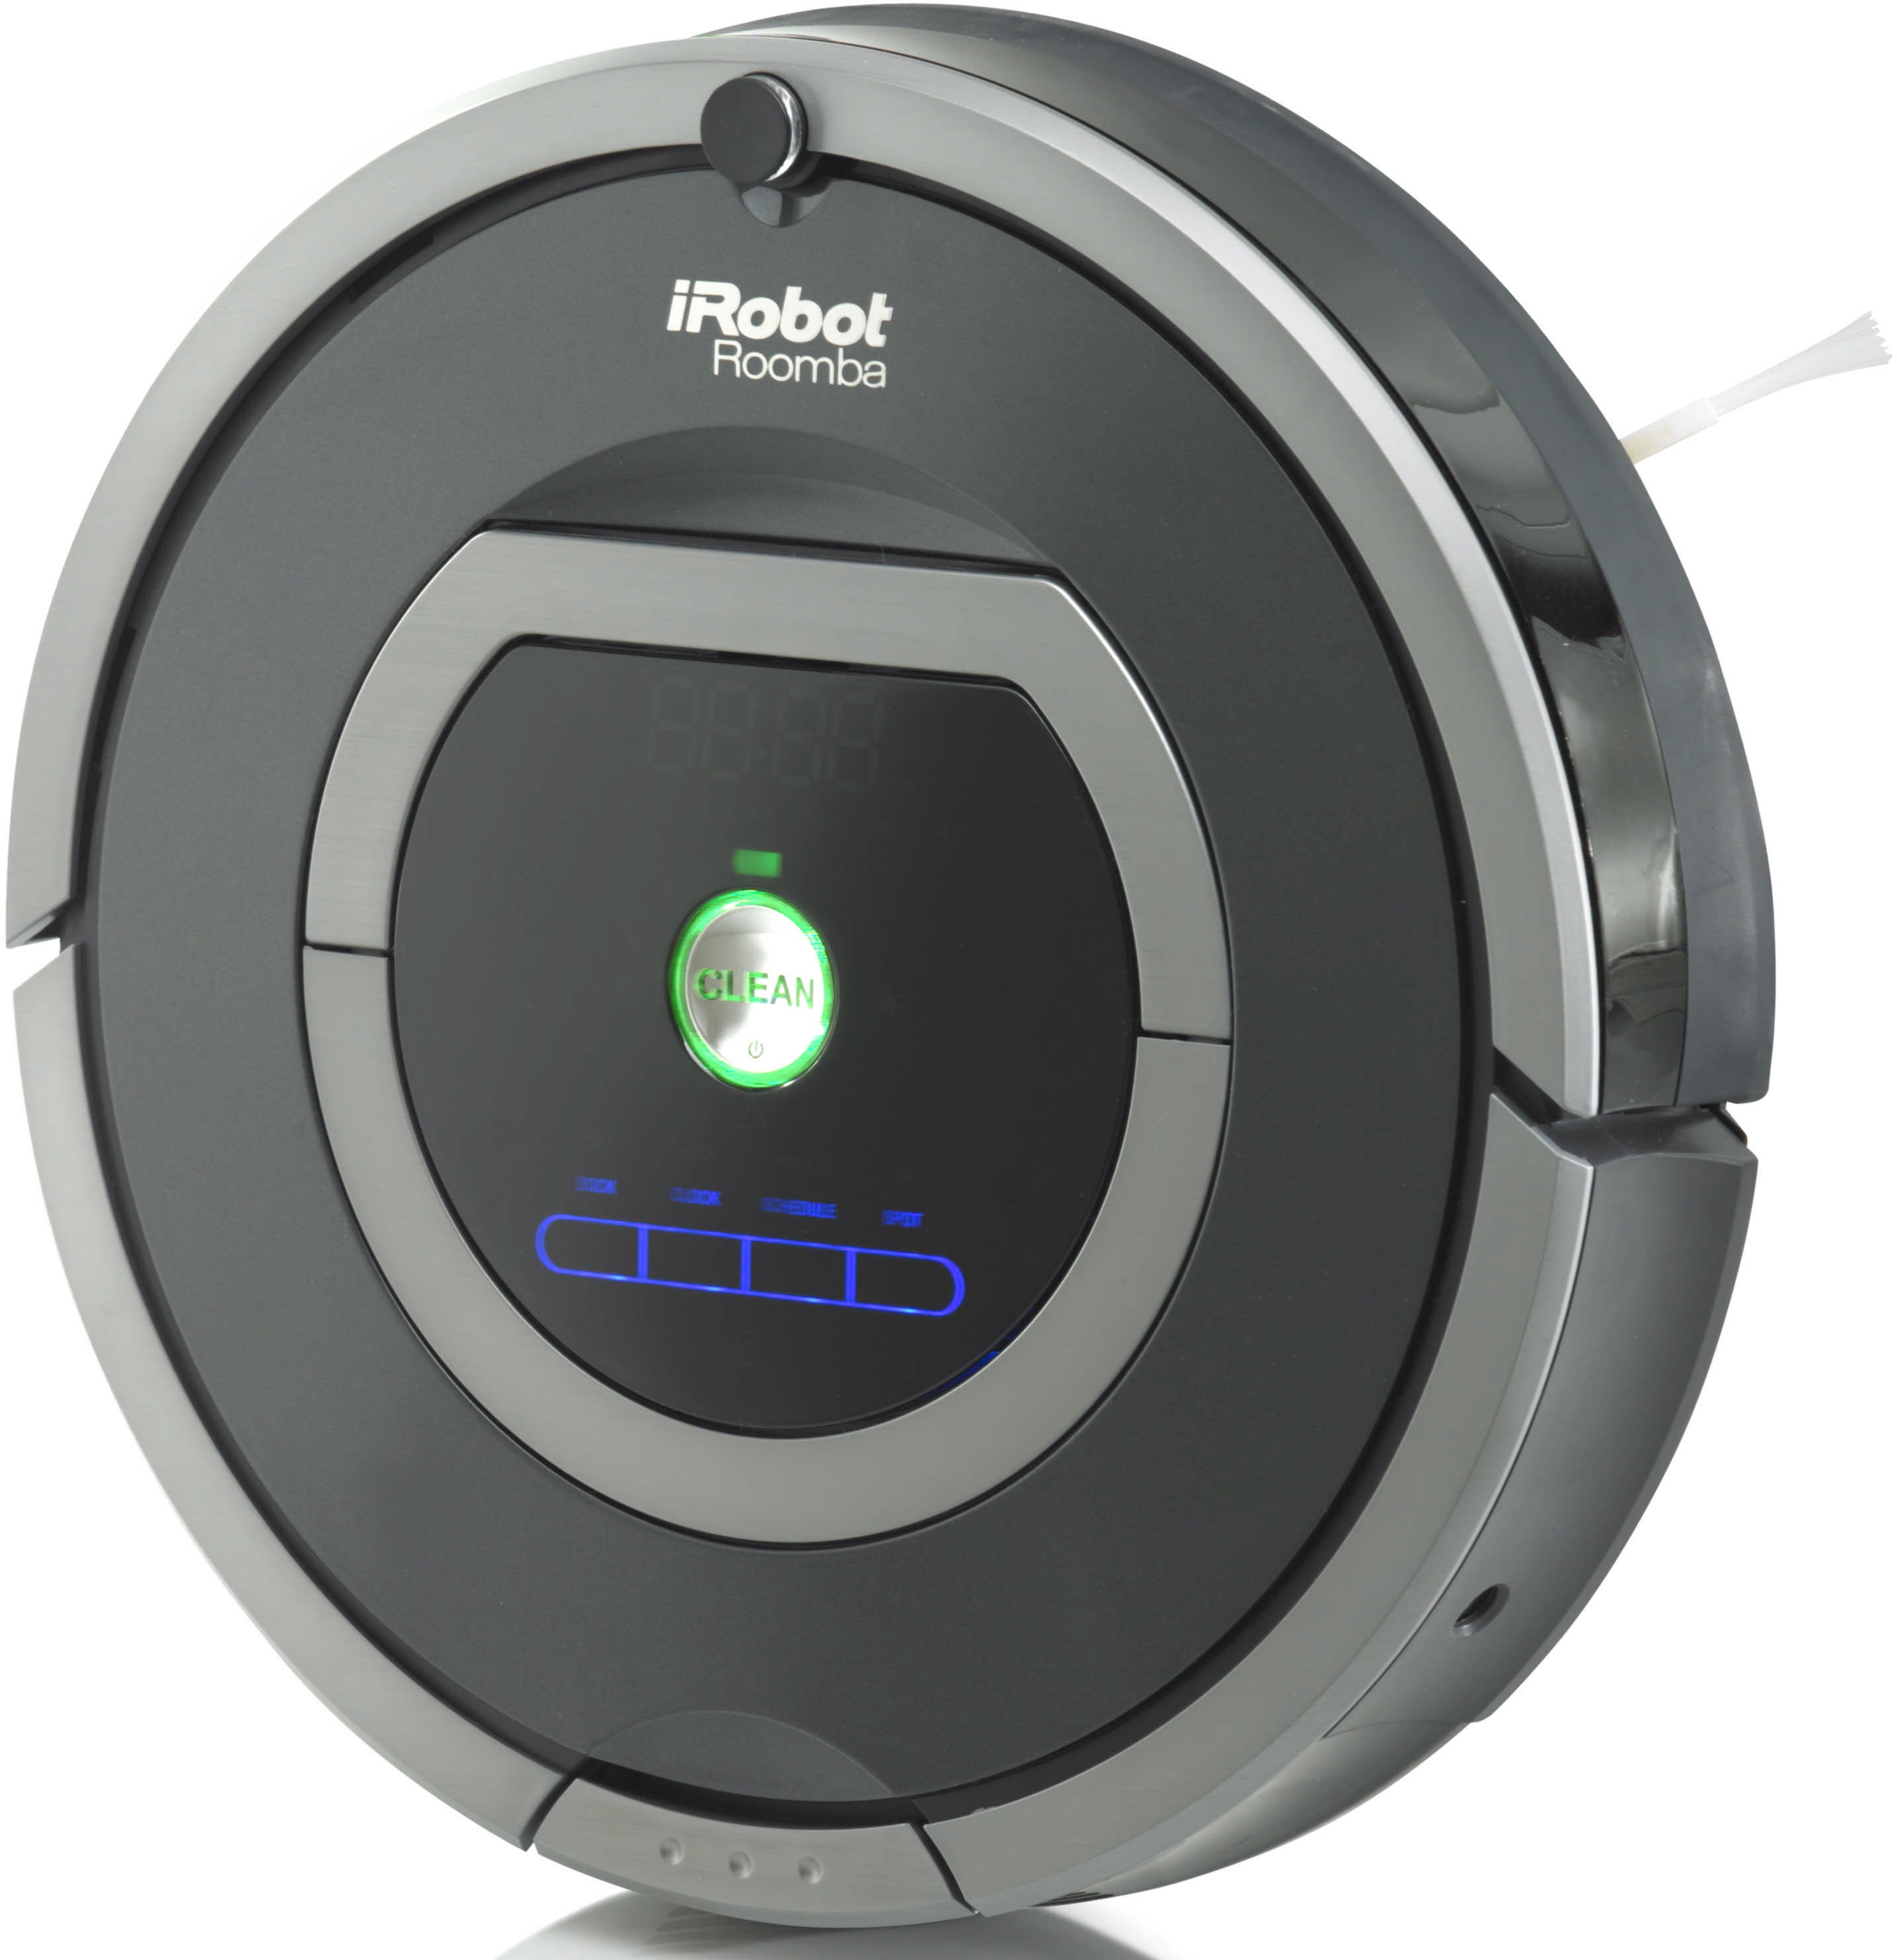 iRobot Roomba 780 Review